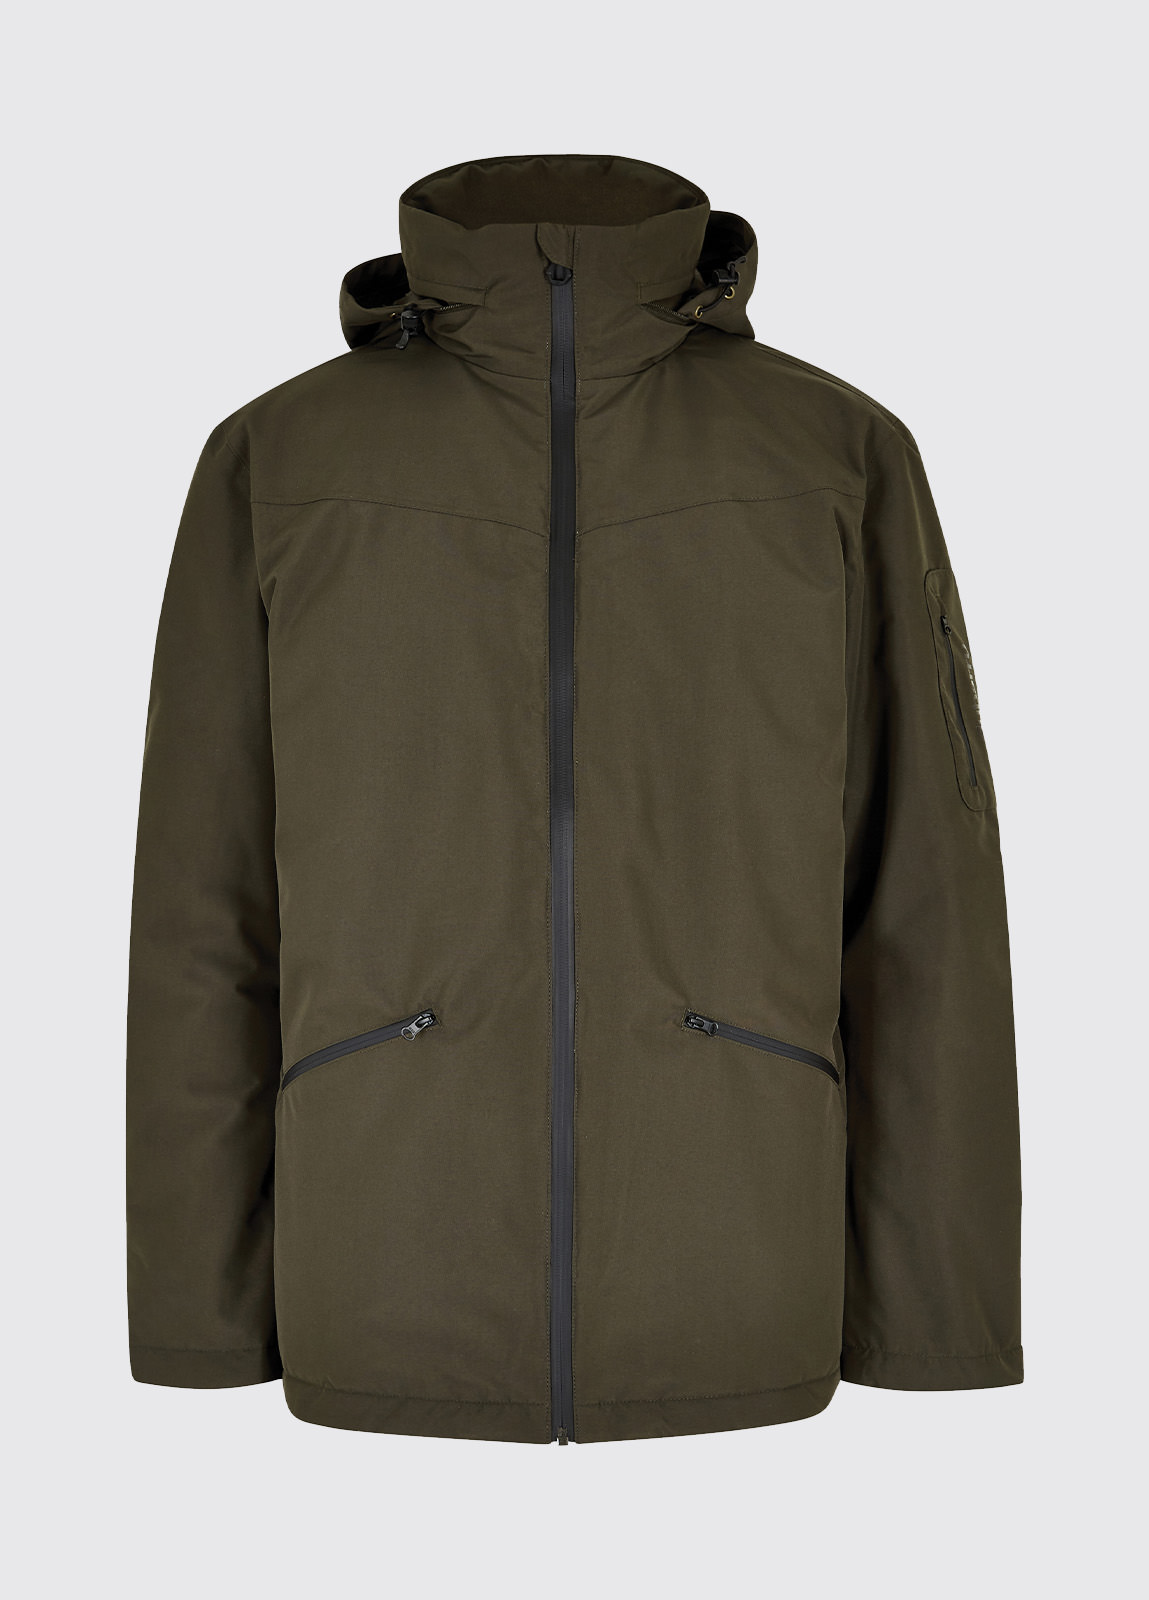 Altamont Down-filled Jacket - Ivy - Size Medium